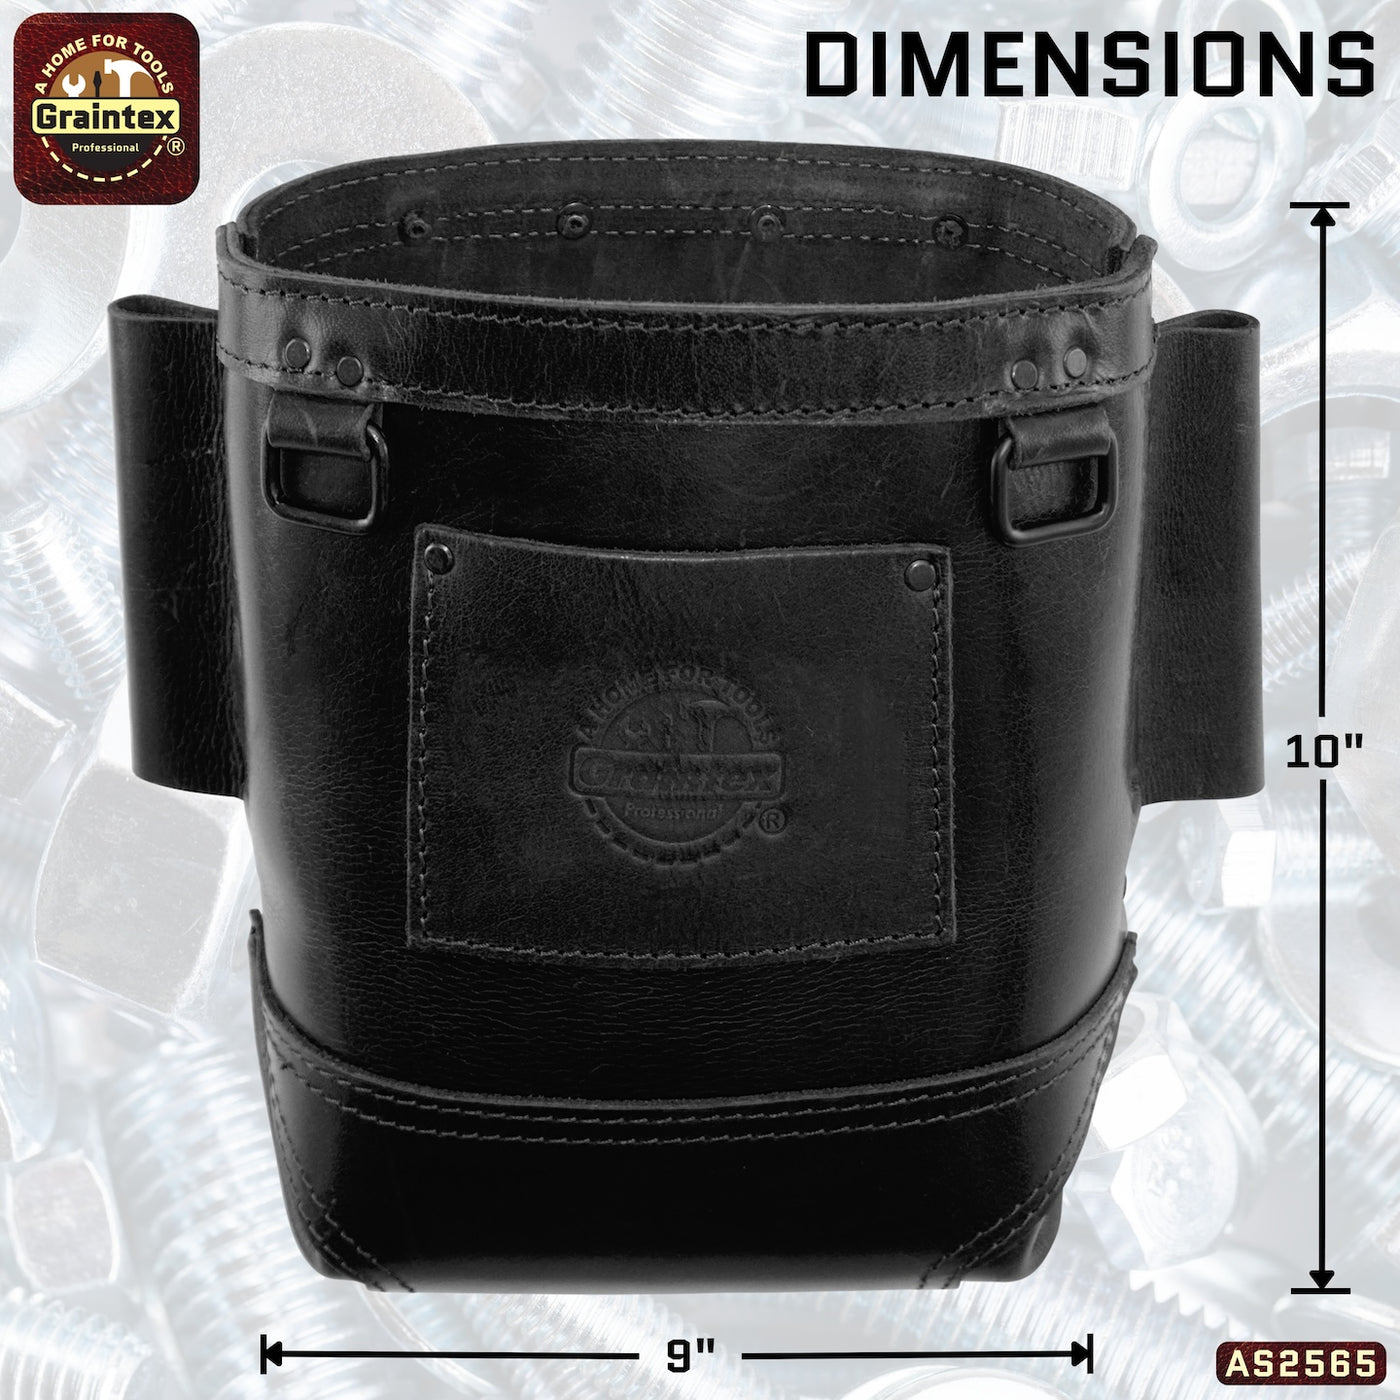 AS2565 :: Nut and Bolt Bag Ambassador Series Black Color Top Grain Leather